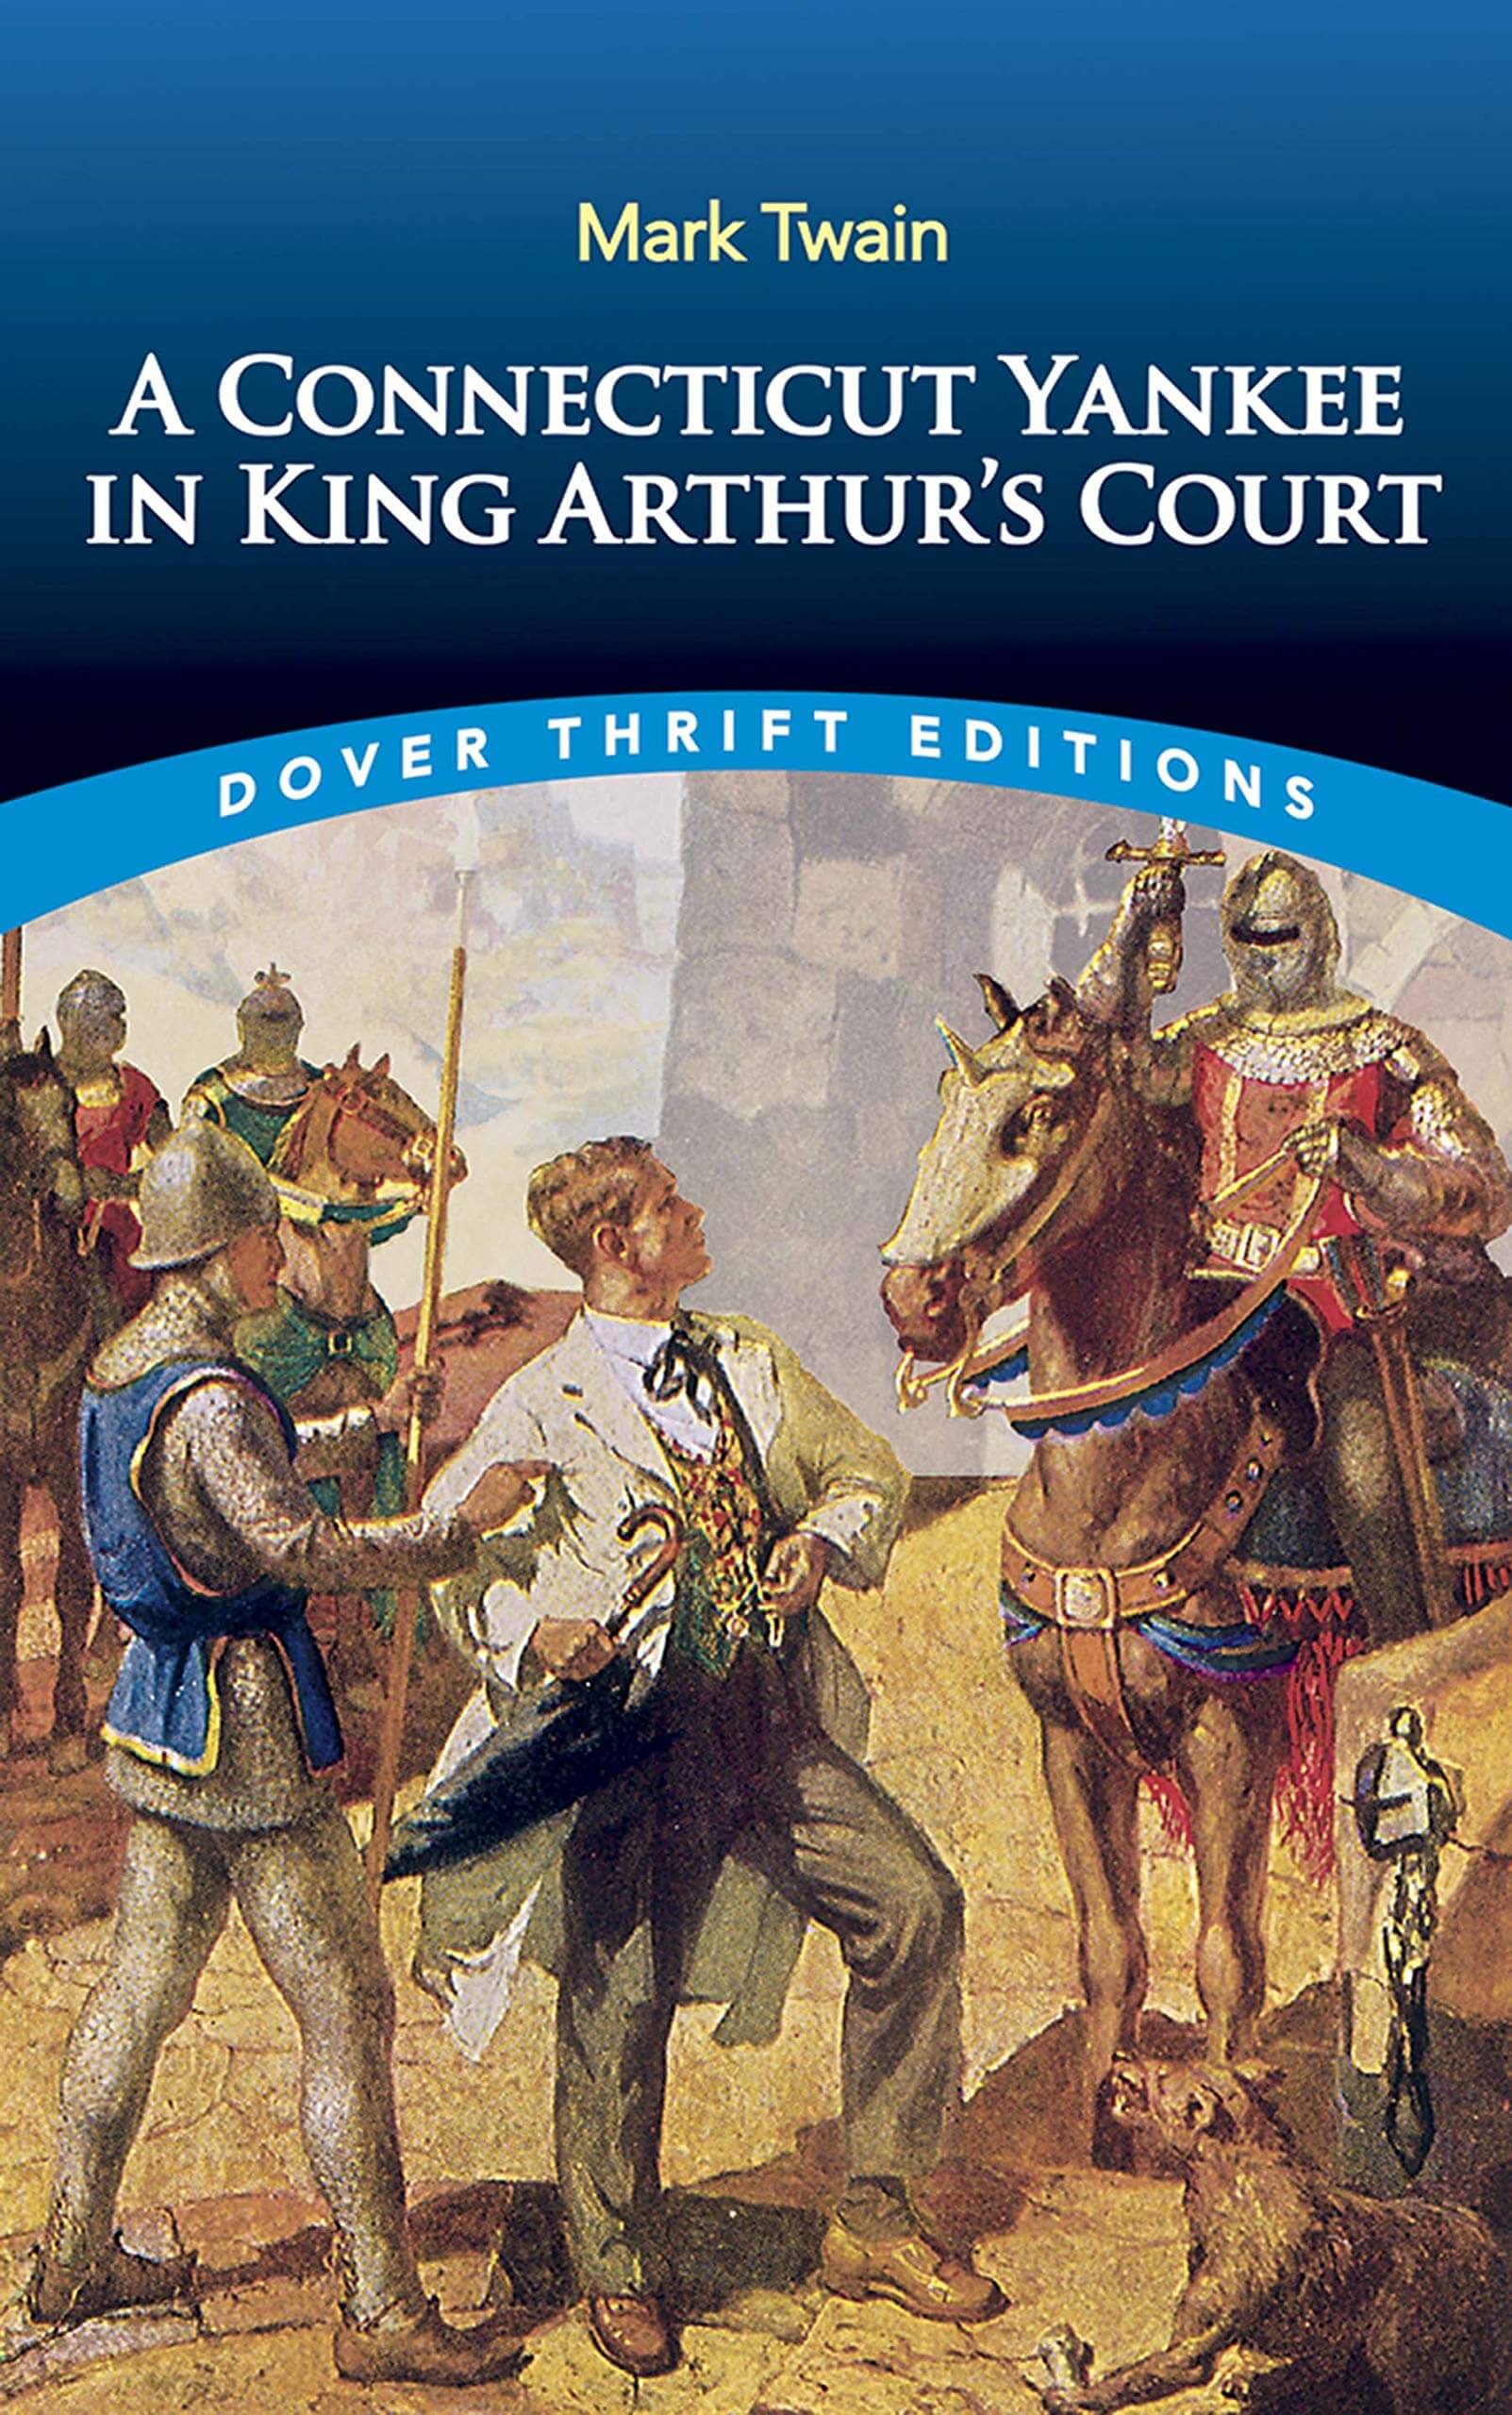 A-Connecticut-Yankee-in-Kings-Arthurs-Court.jpg